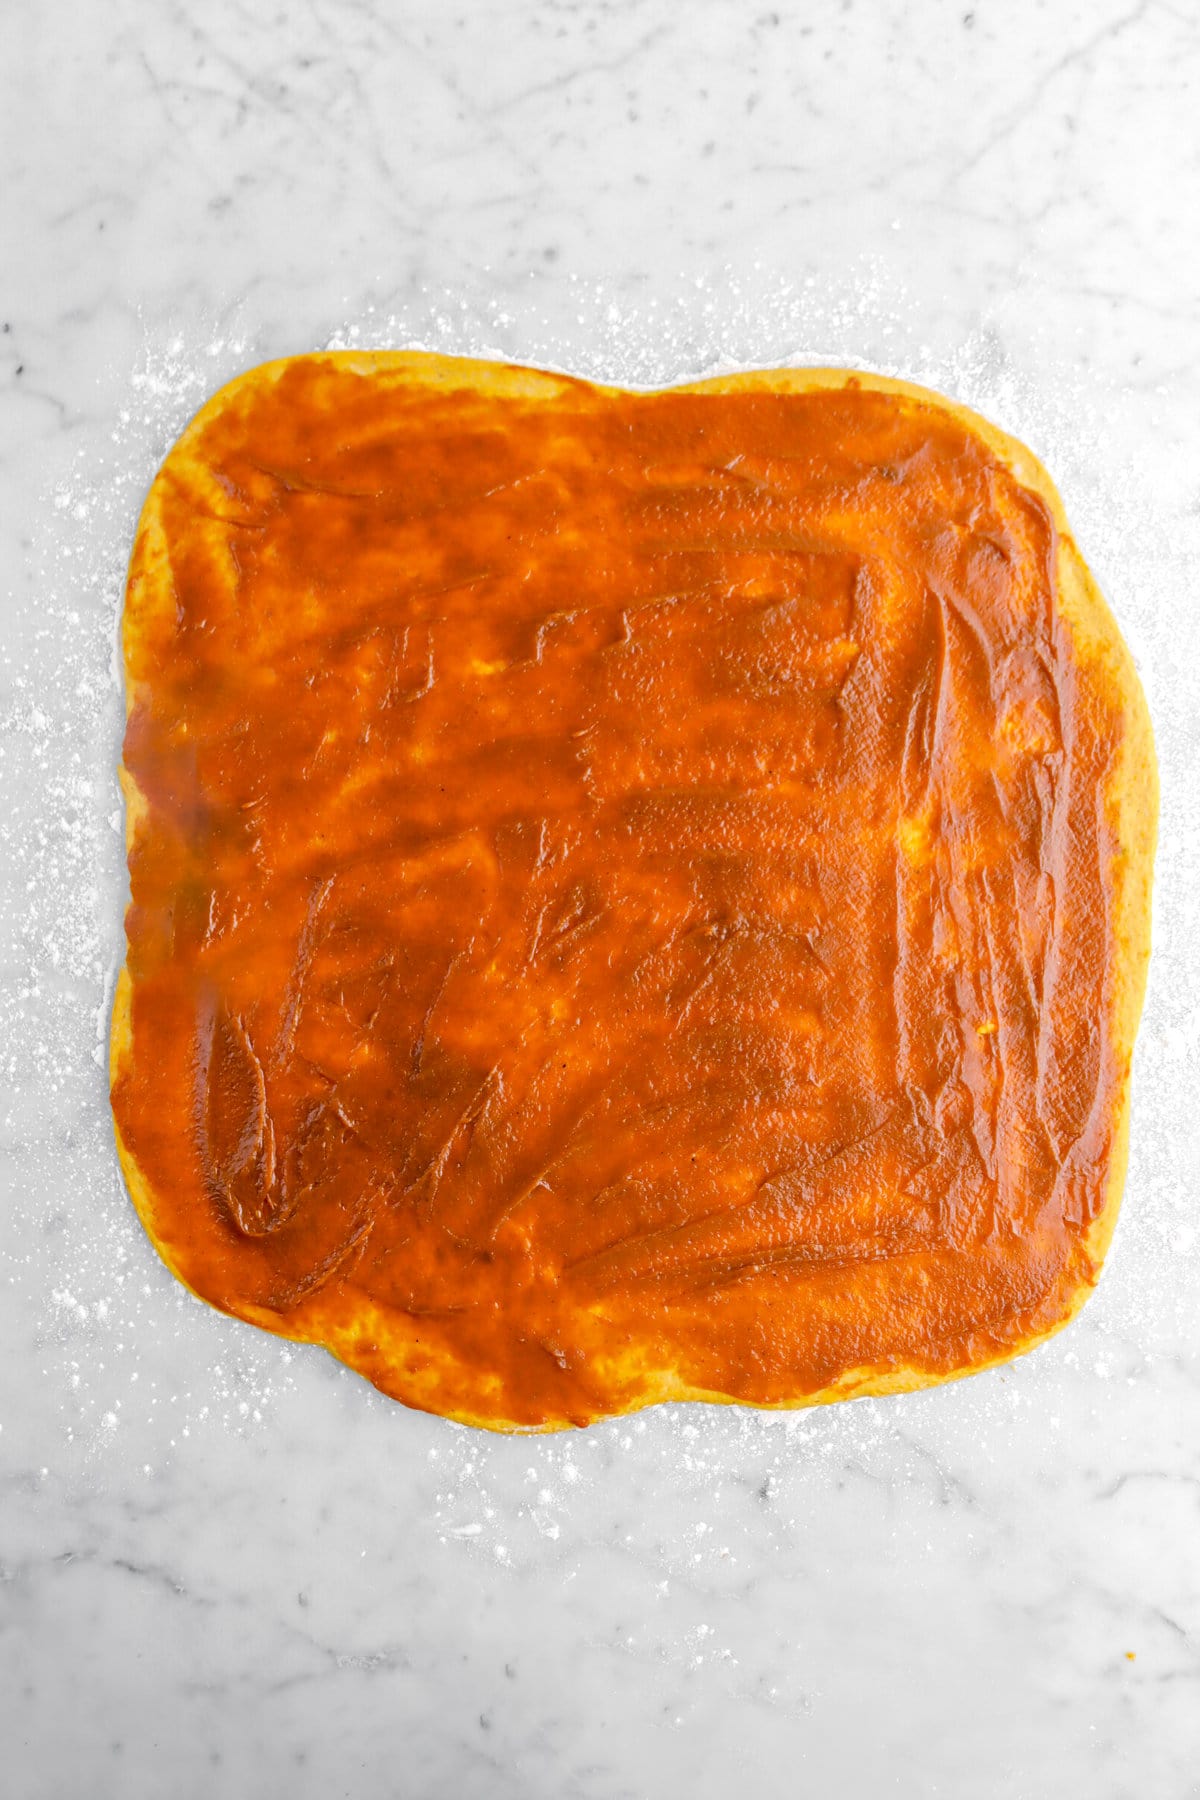 pumpkin butter spread across dough on marble surface.